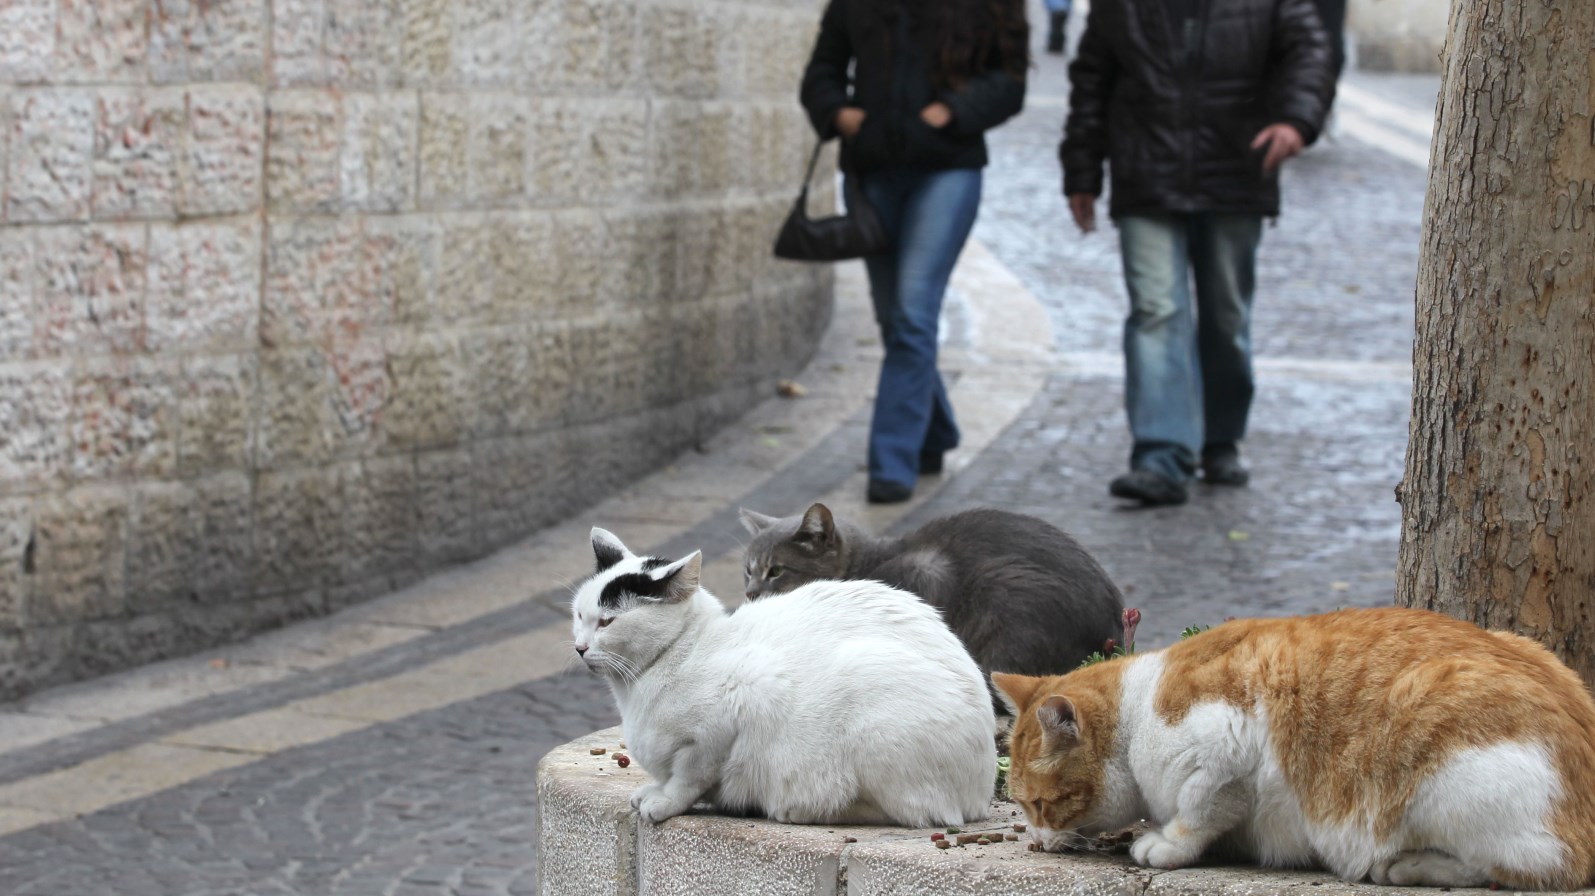 Photo of Jerusalem street cats by Nati Shohat/FLASH90